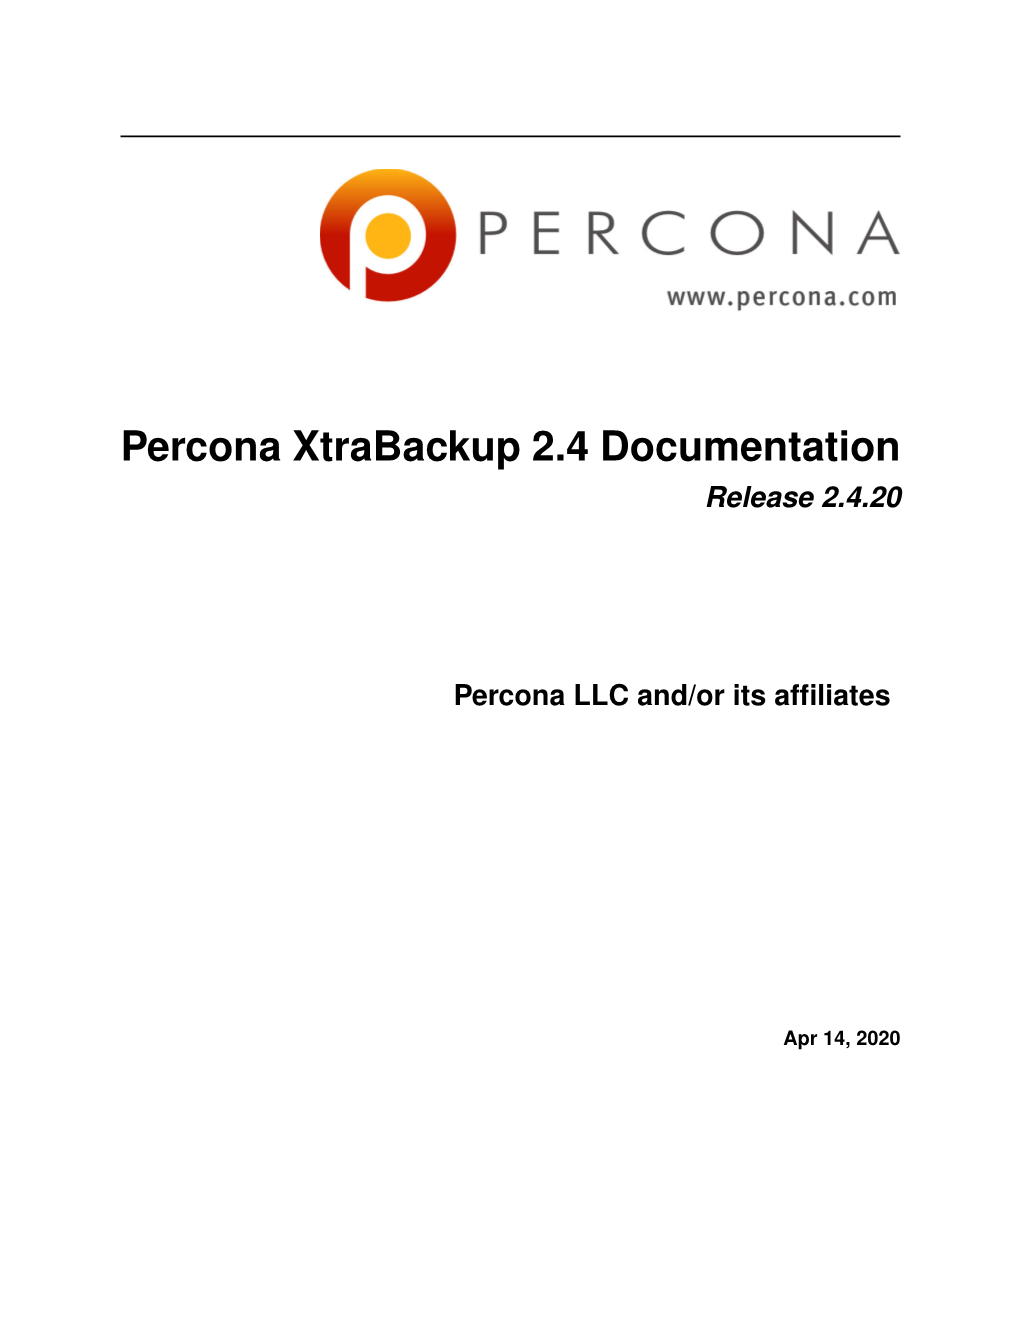 Percona Xtrabackup 2.4 Documentation Release 2.4.20